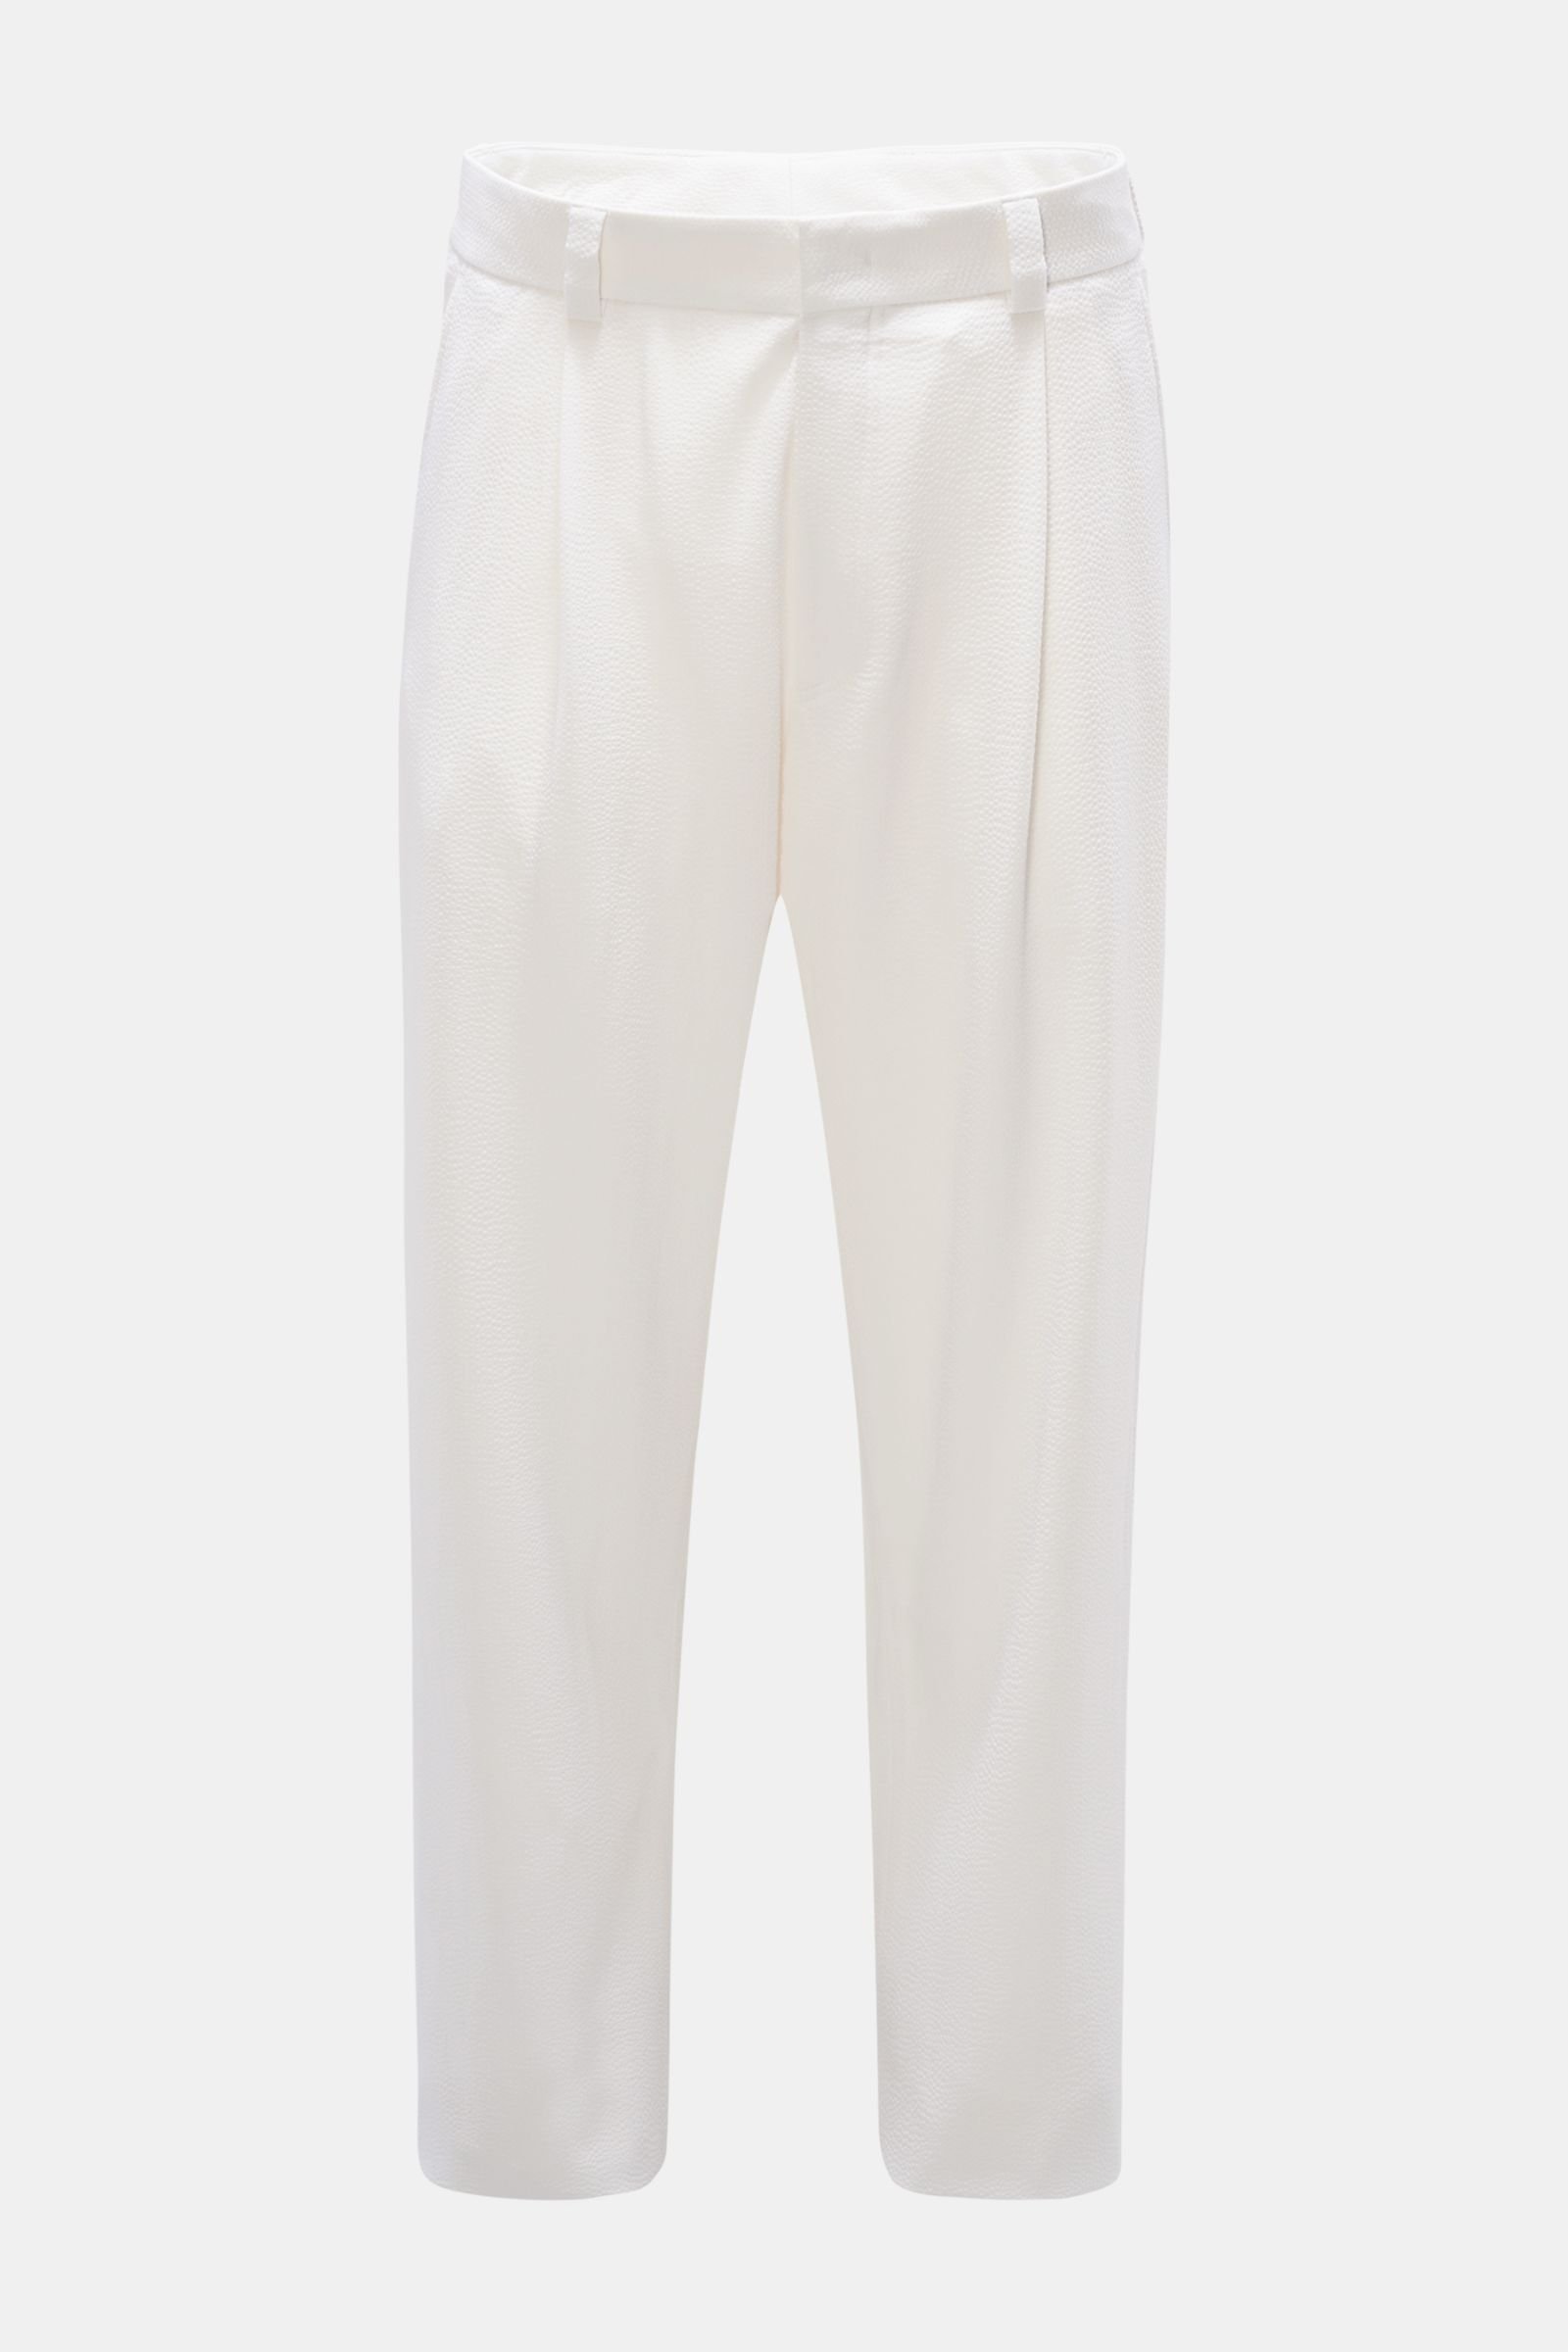 Seersucker trousers off-white